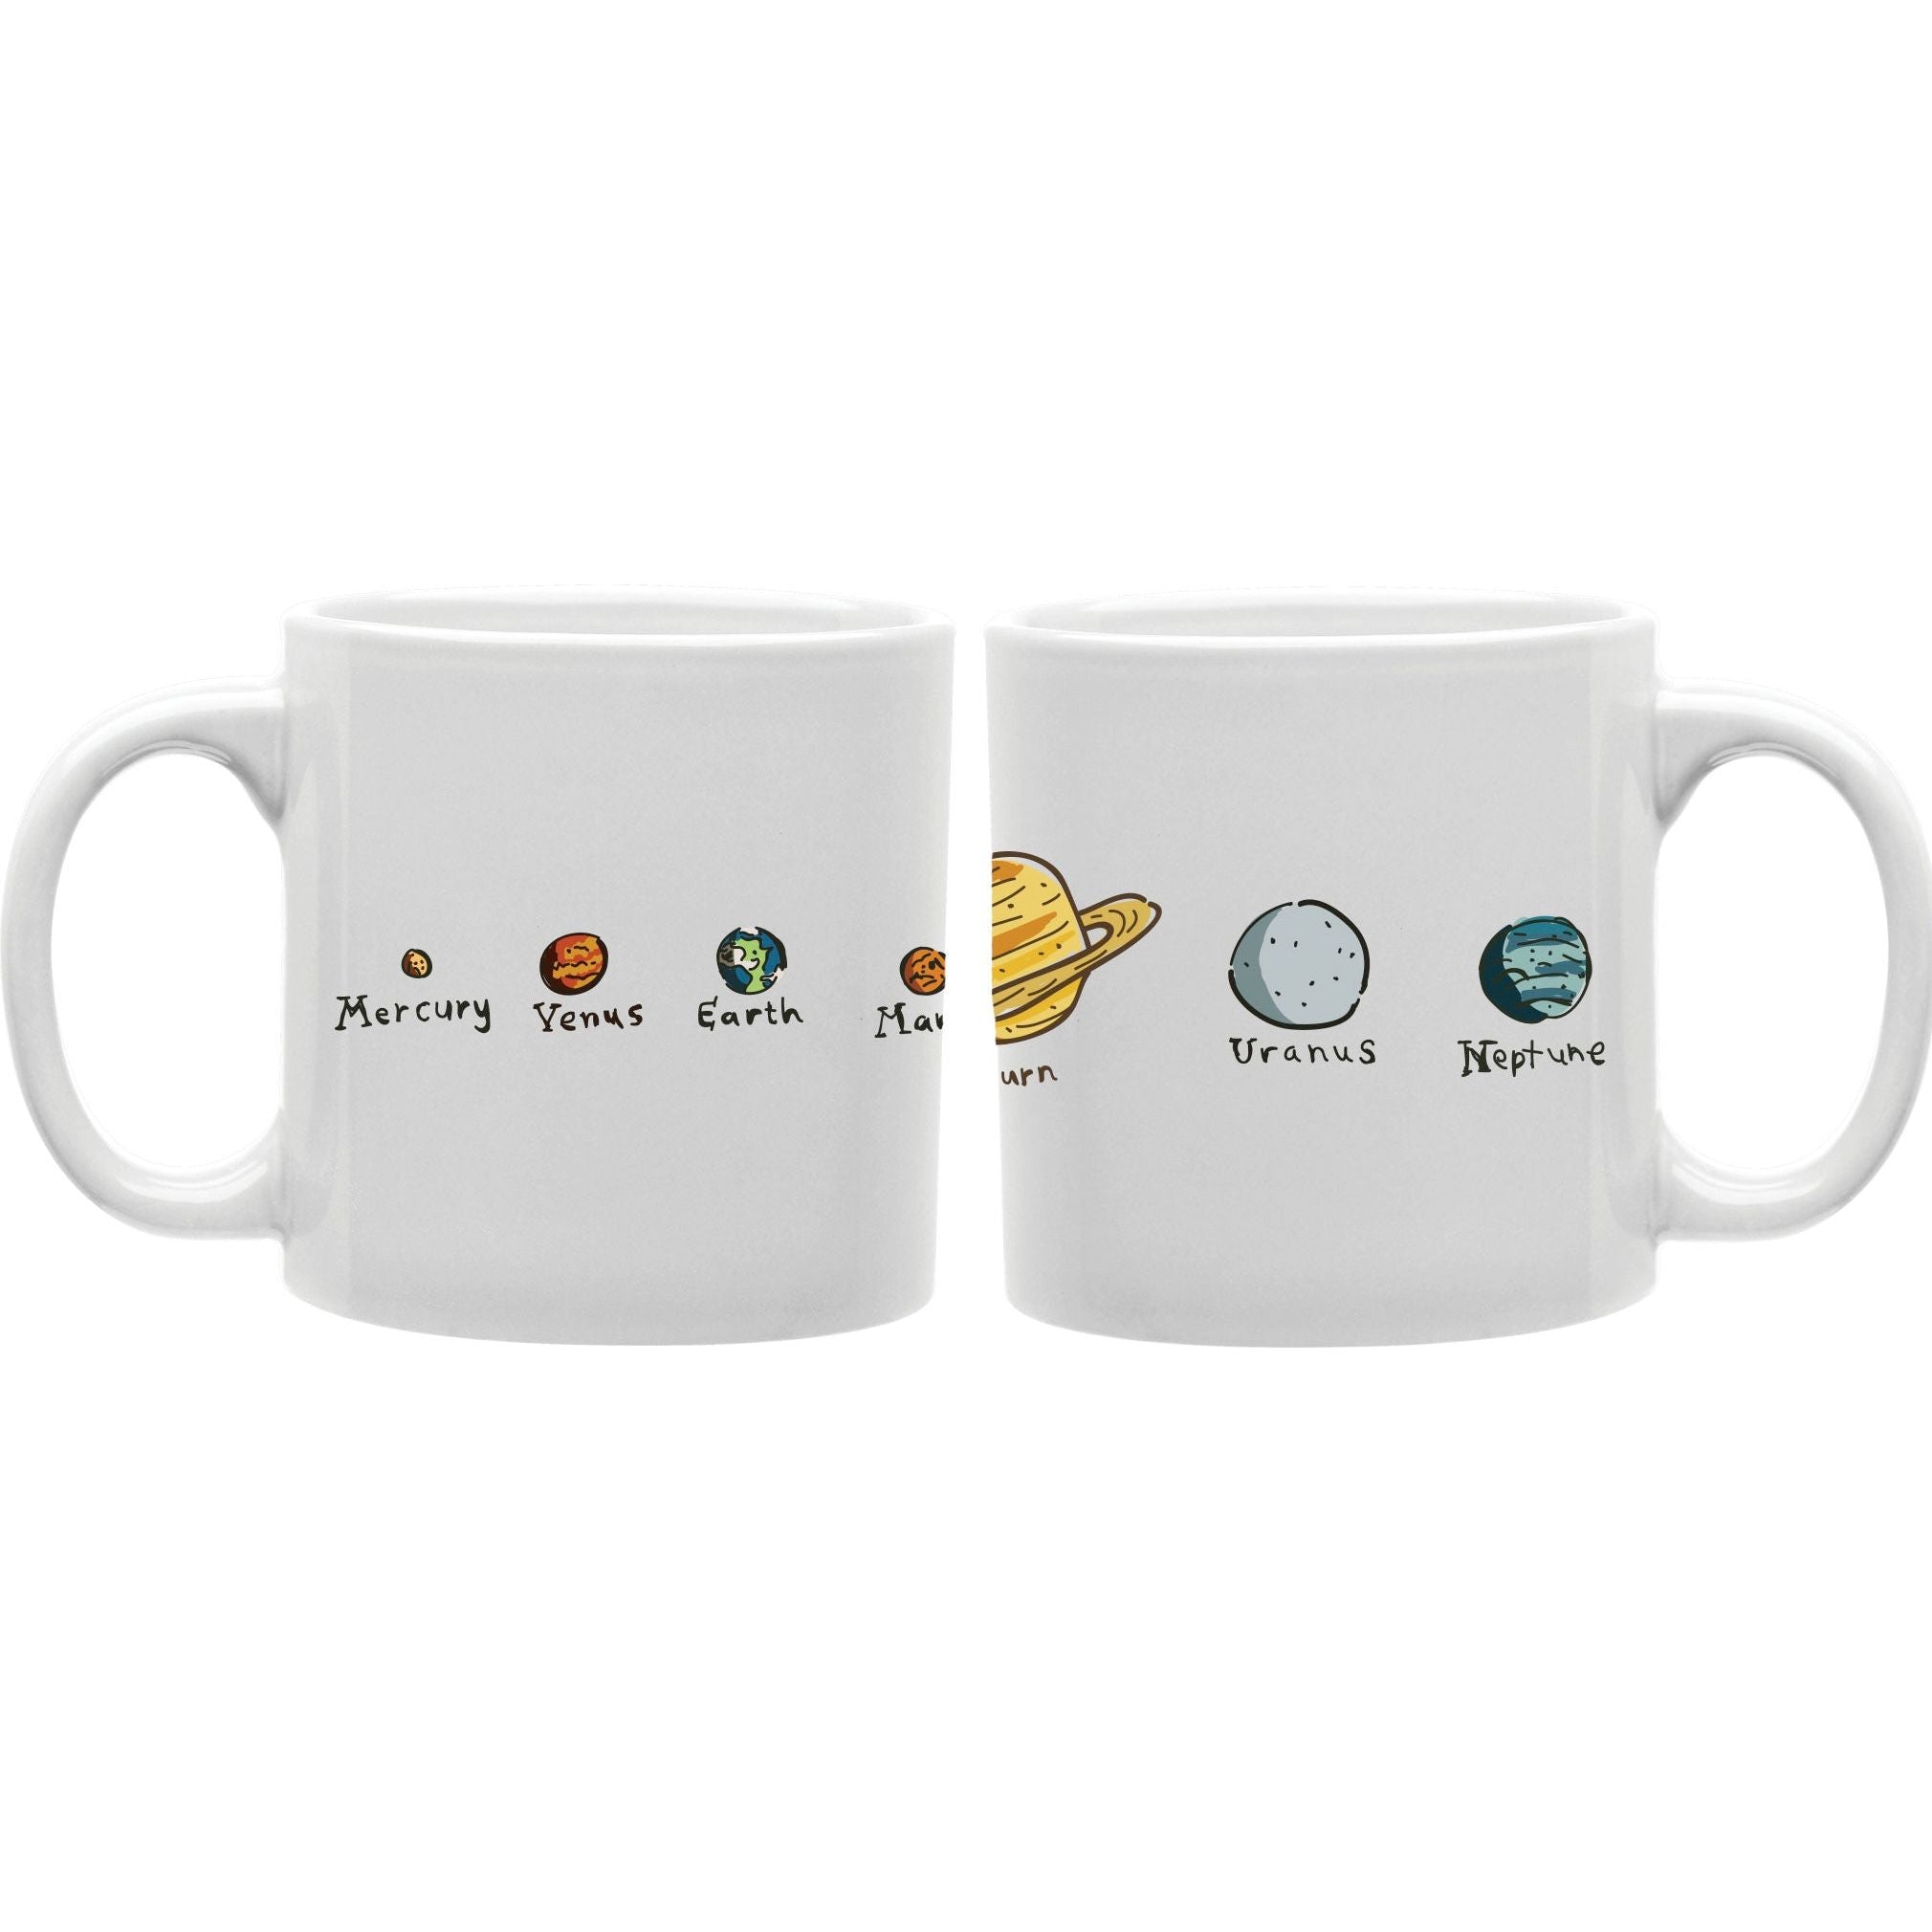 Mercury Yerus Earth Man Urn Uranus Neptune Mug  Coffee and Tea Ceramic  Mug 11oz